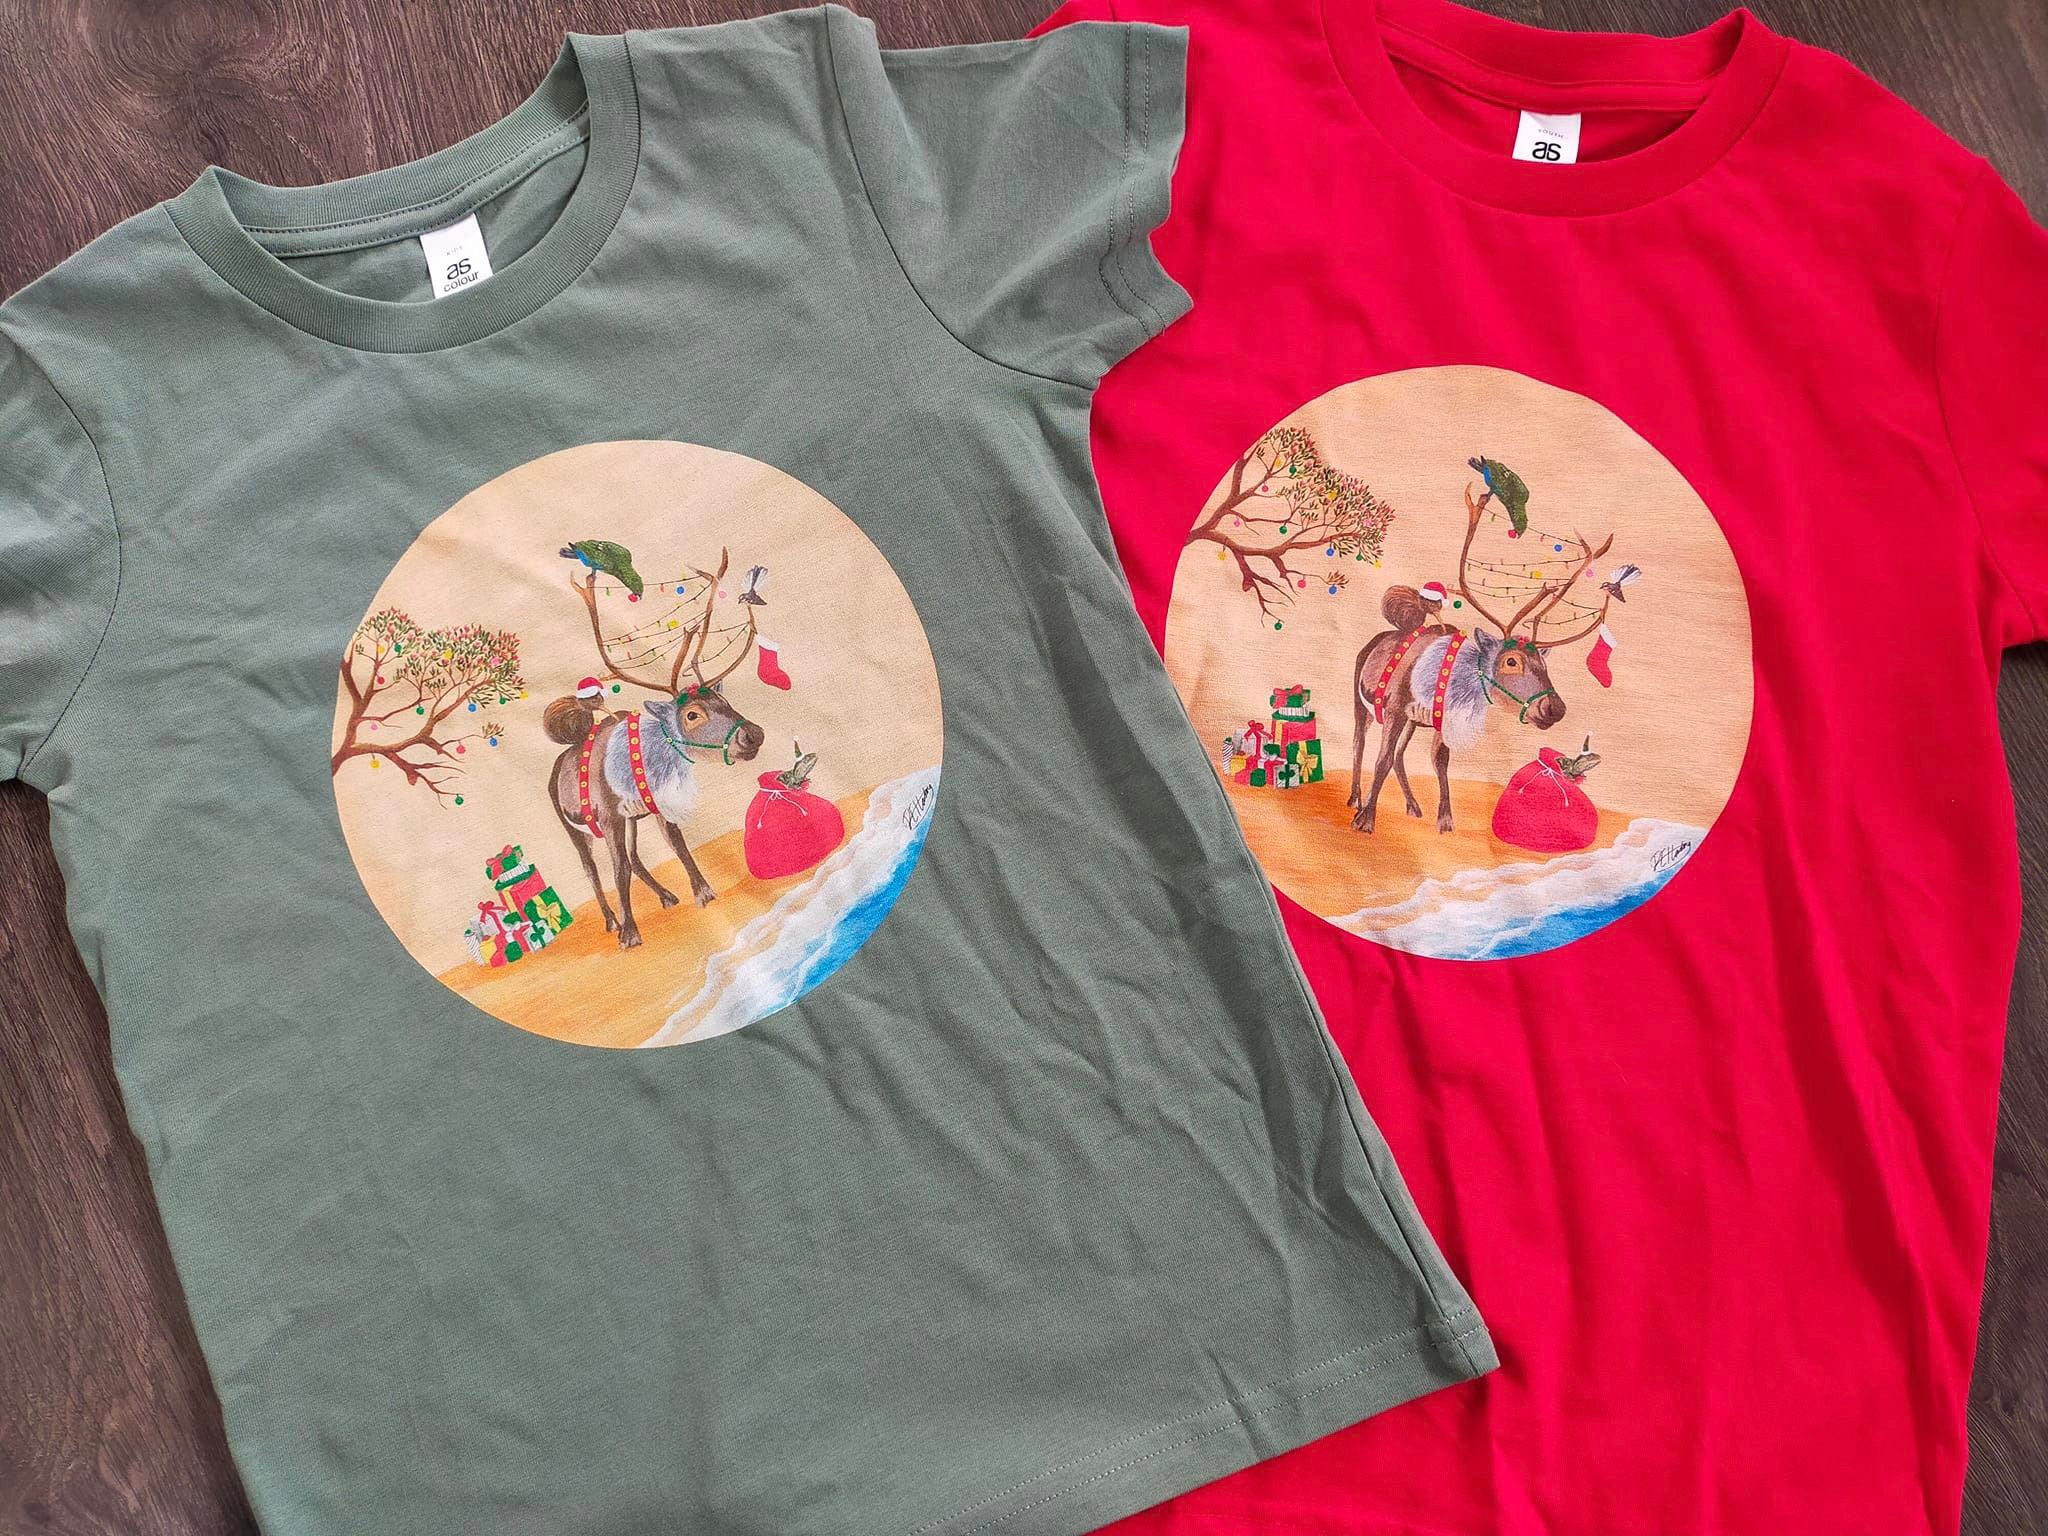 Christmas Beach Party tee - Christmas t shirts collection TRISH HARDING ART